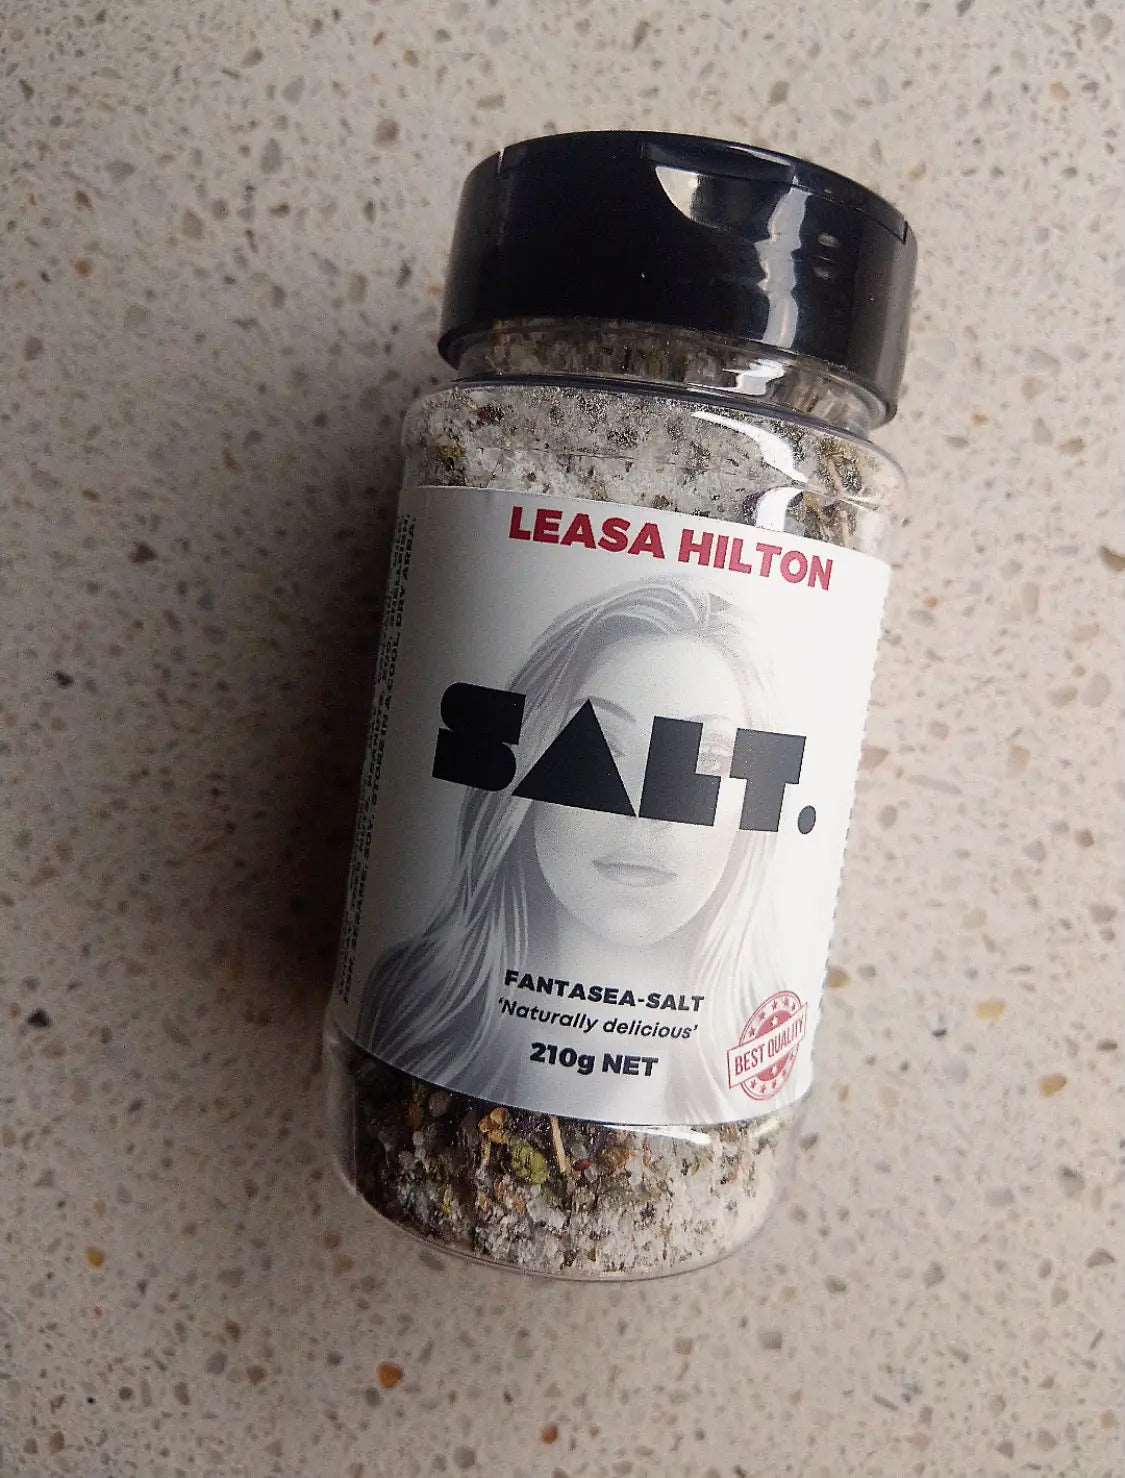 Fantasea-salt Gourmet Sea Salt 210g - Leasa Hilton